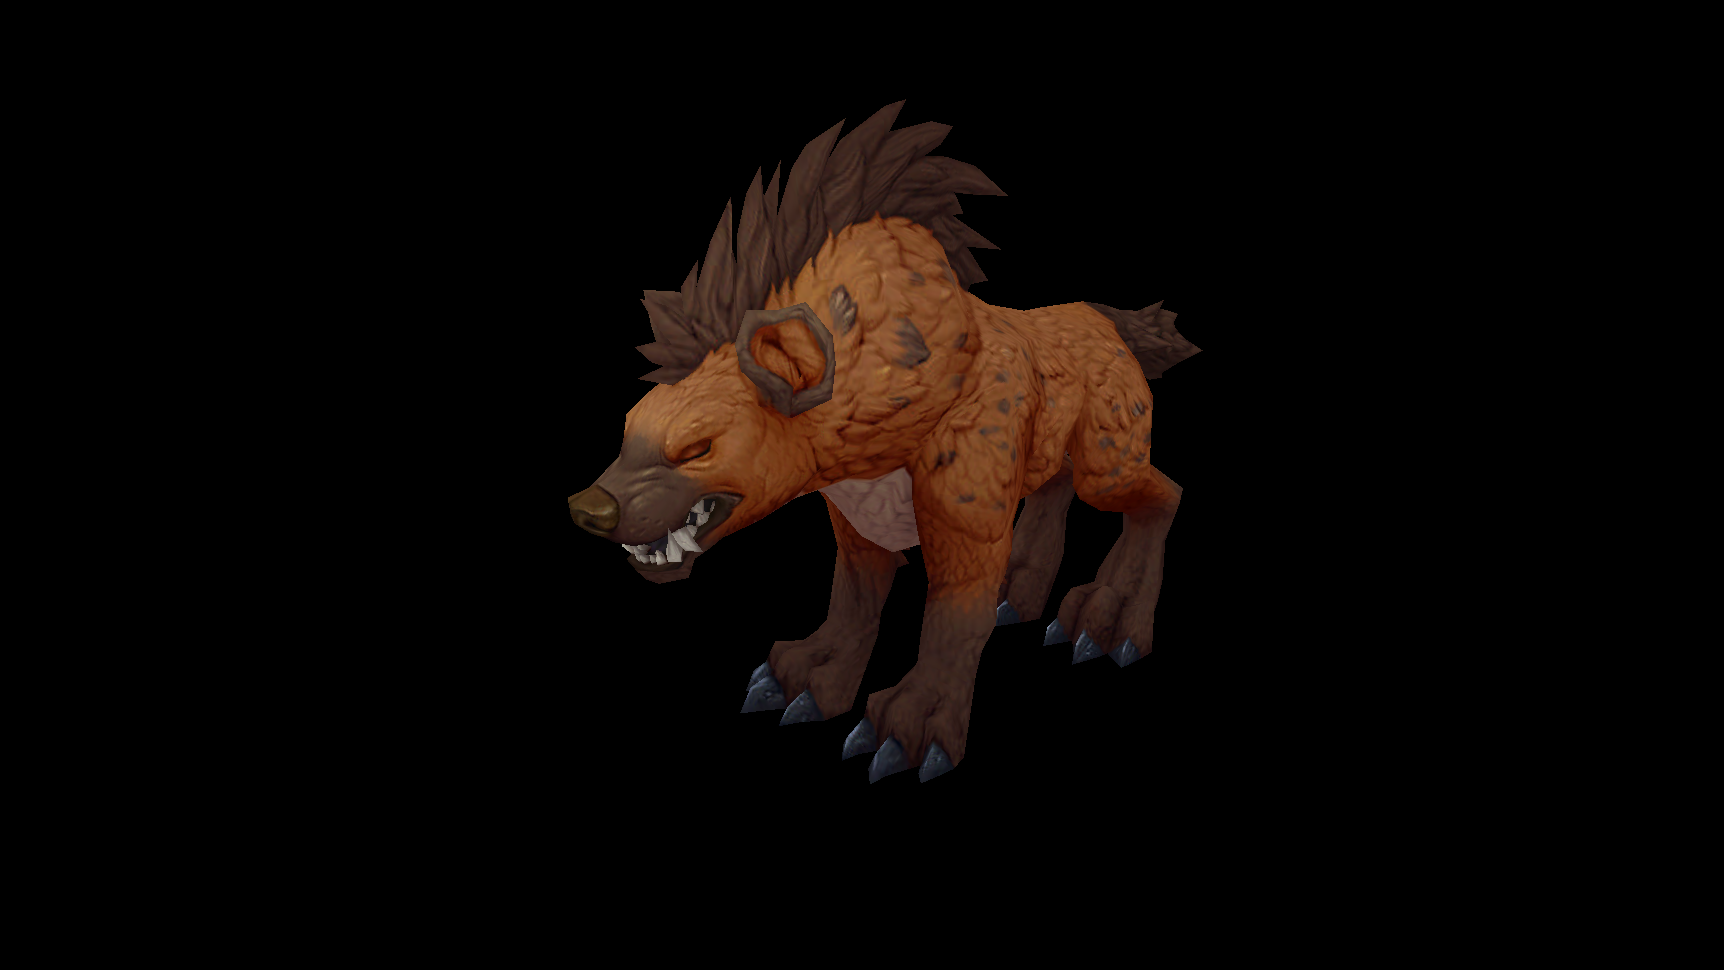 鬣狗模型